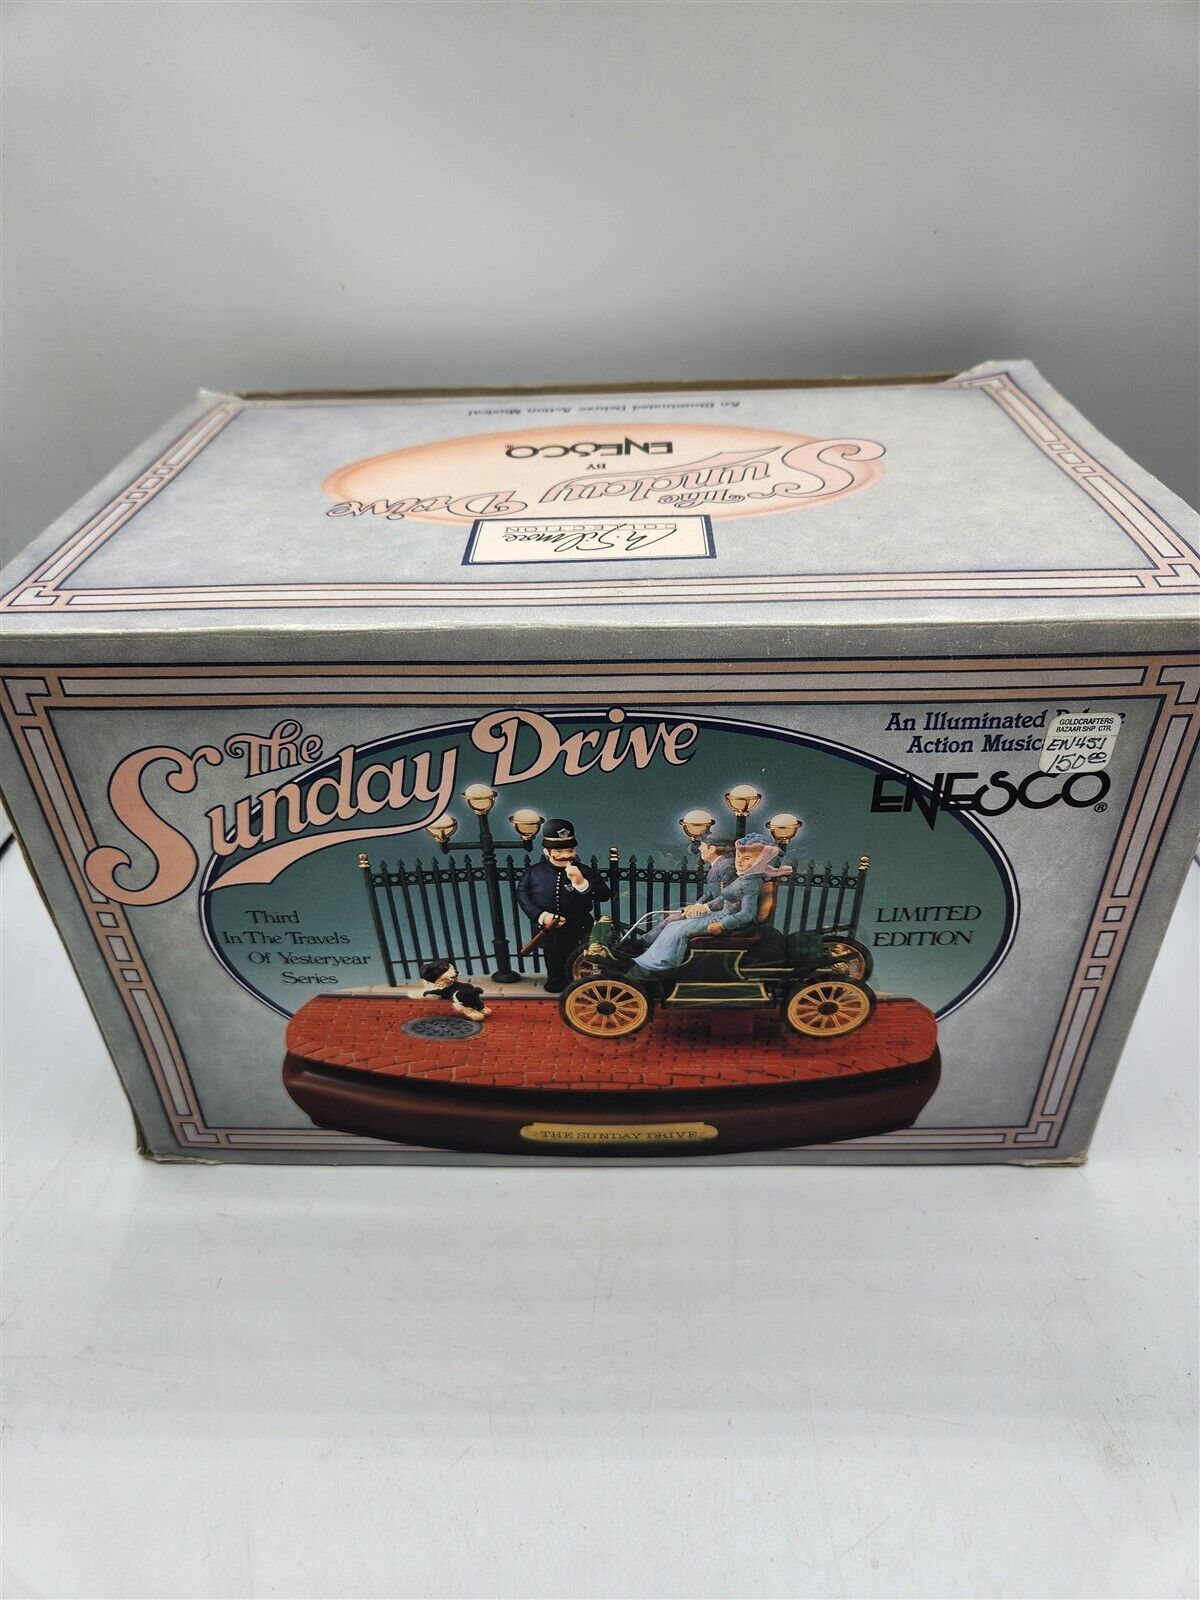 Enesco "The Sunday Drive" Animated Music Box - New in box - $35.59